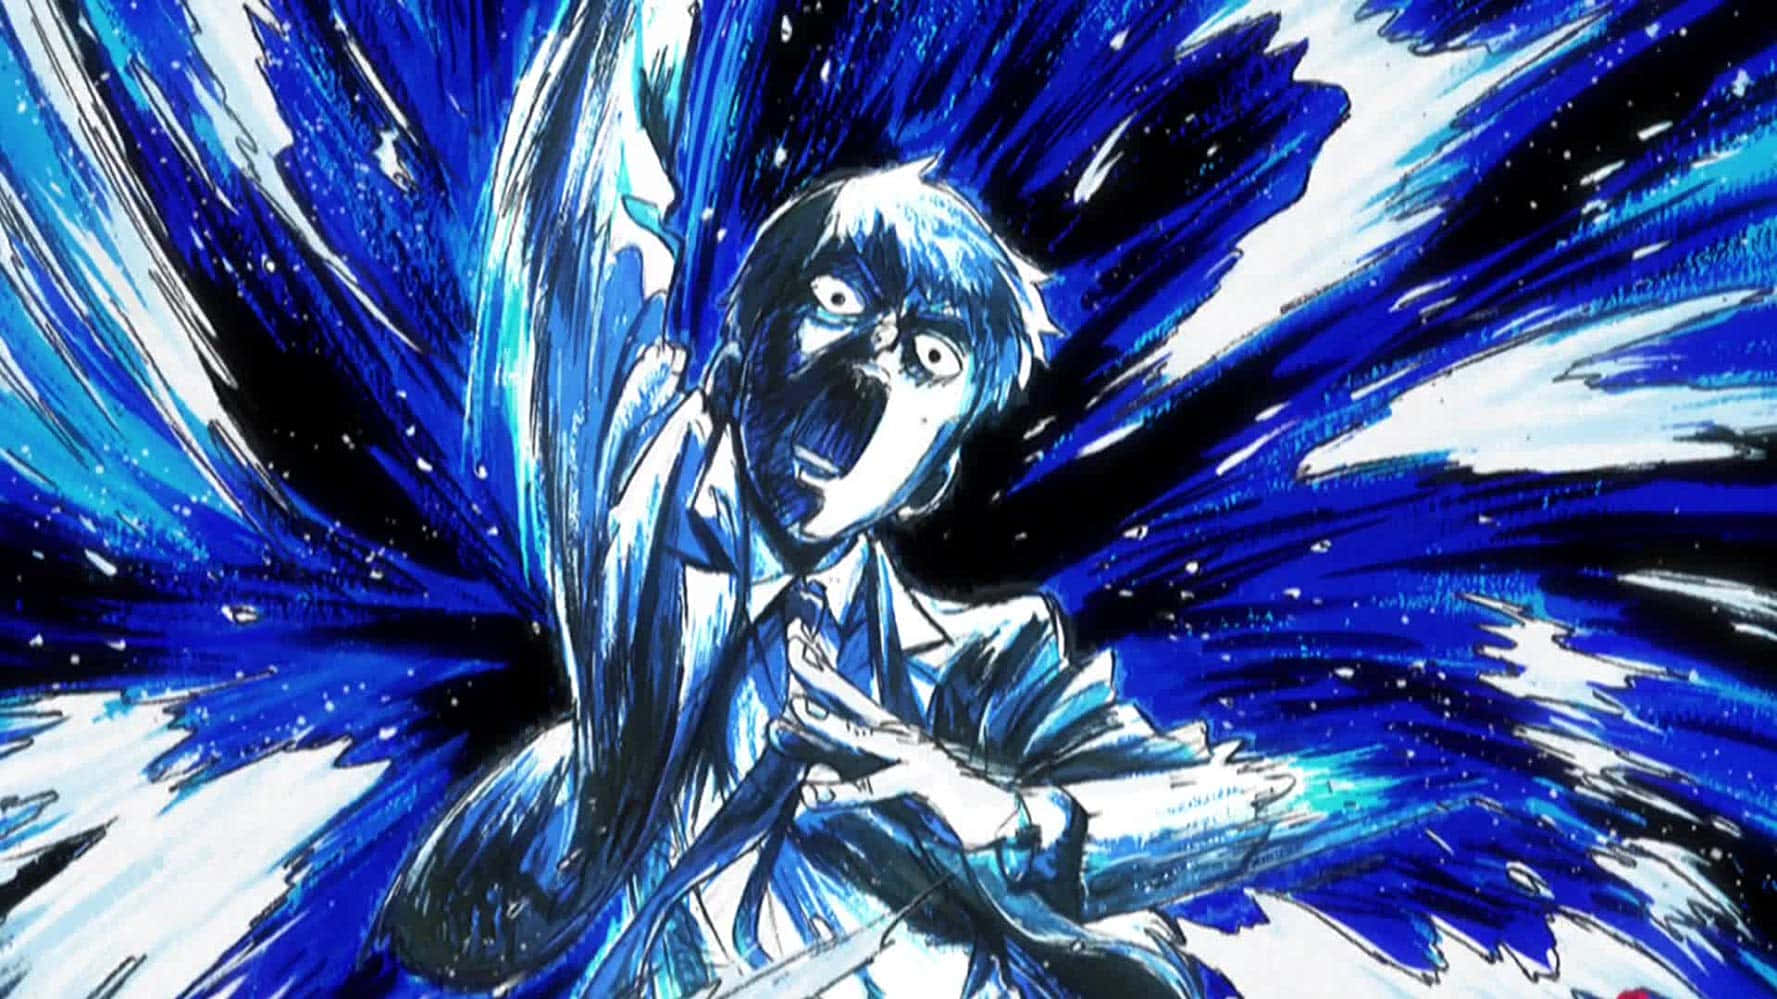 Arataka Reigen unleashes his psychic powers. Wallpaper